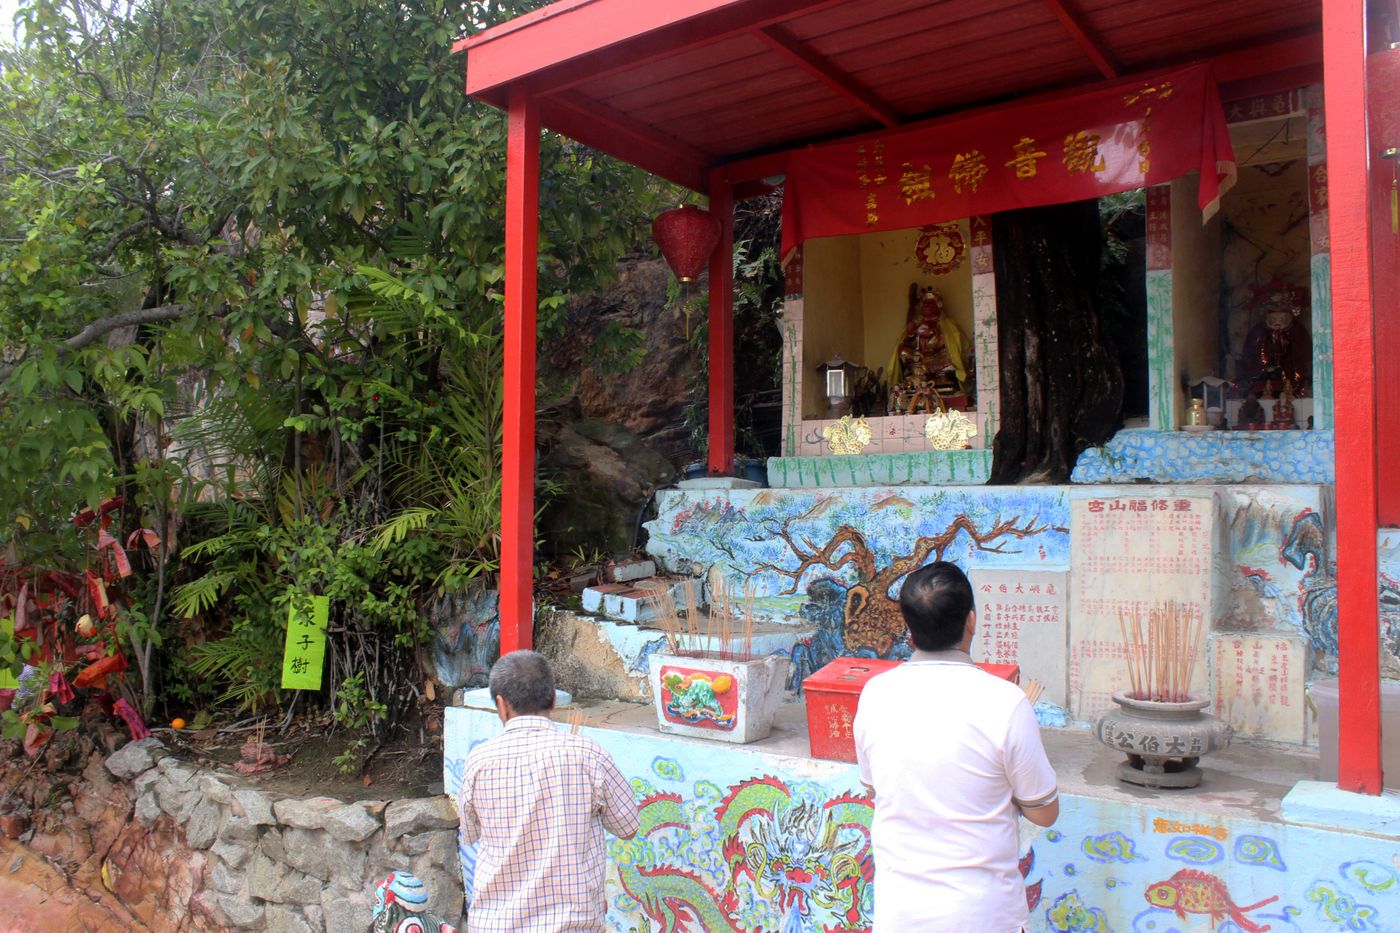 Devotees make an annual pilgrimage to Kusu Island to worship local deities.